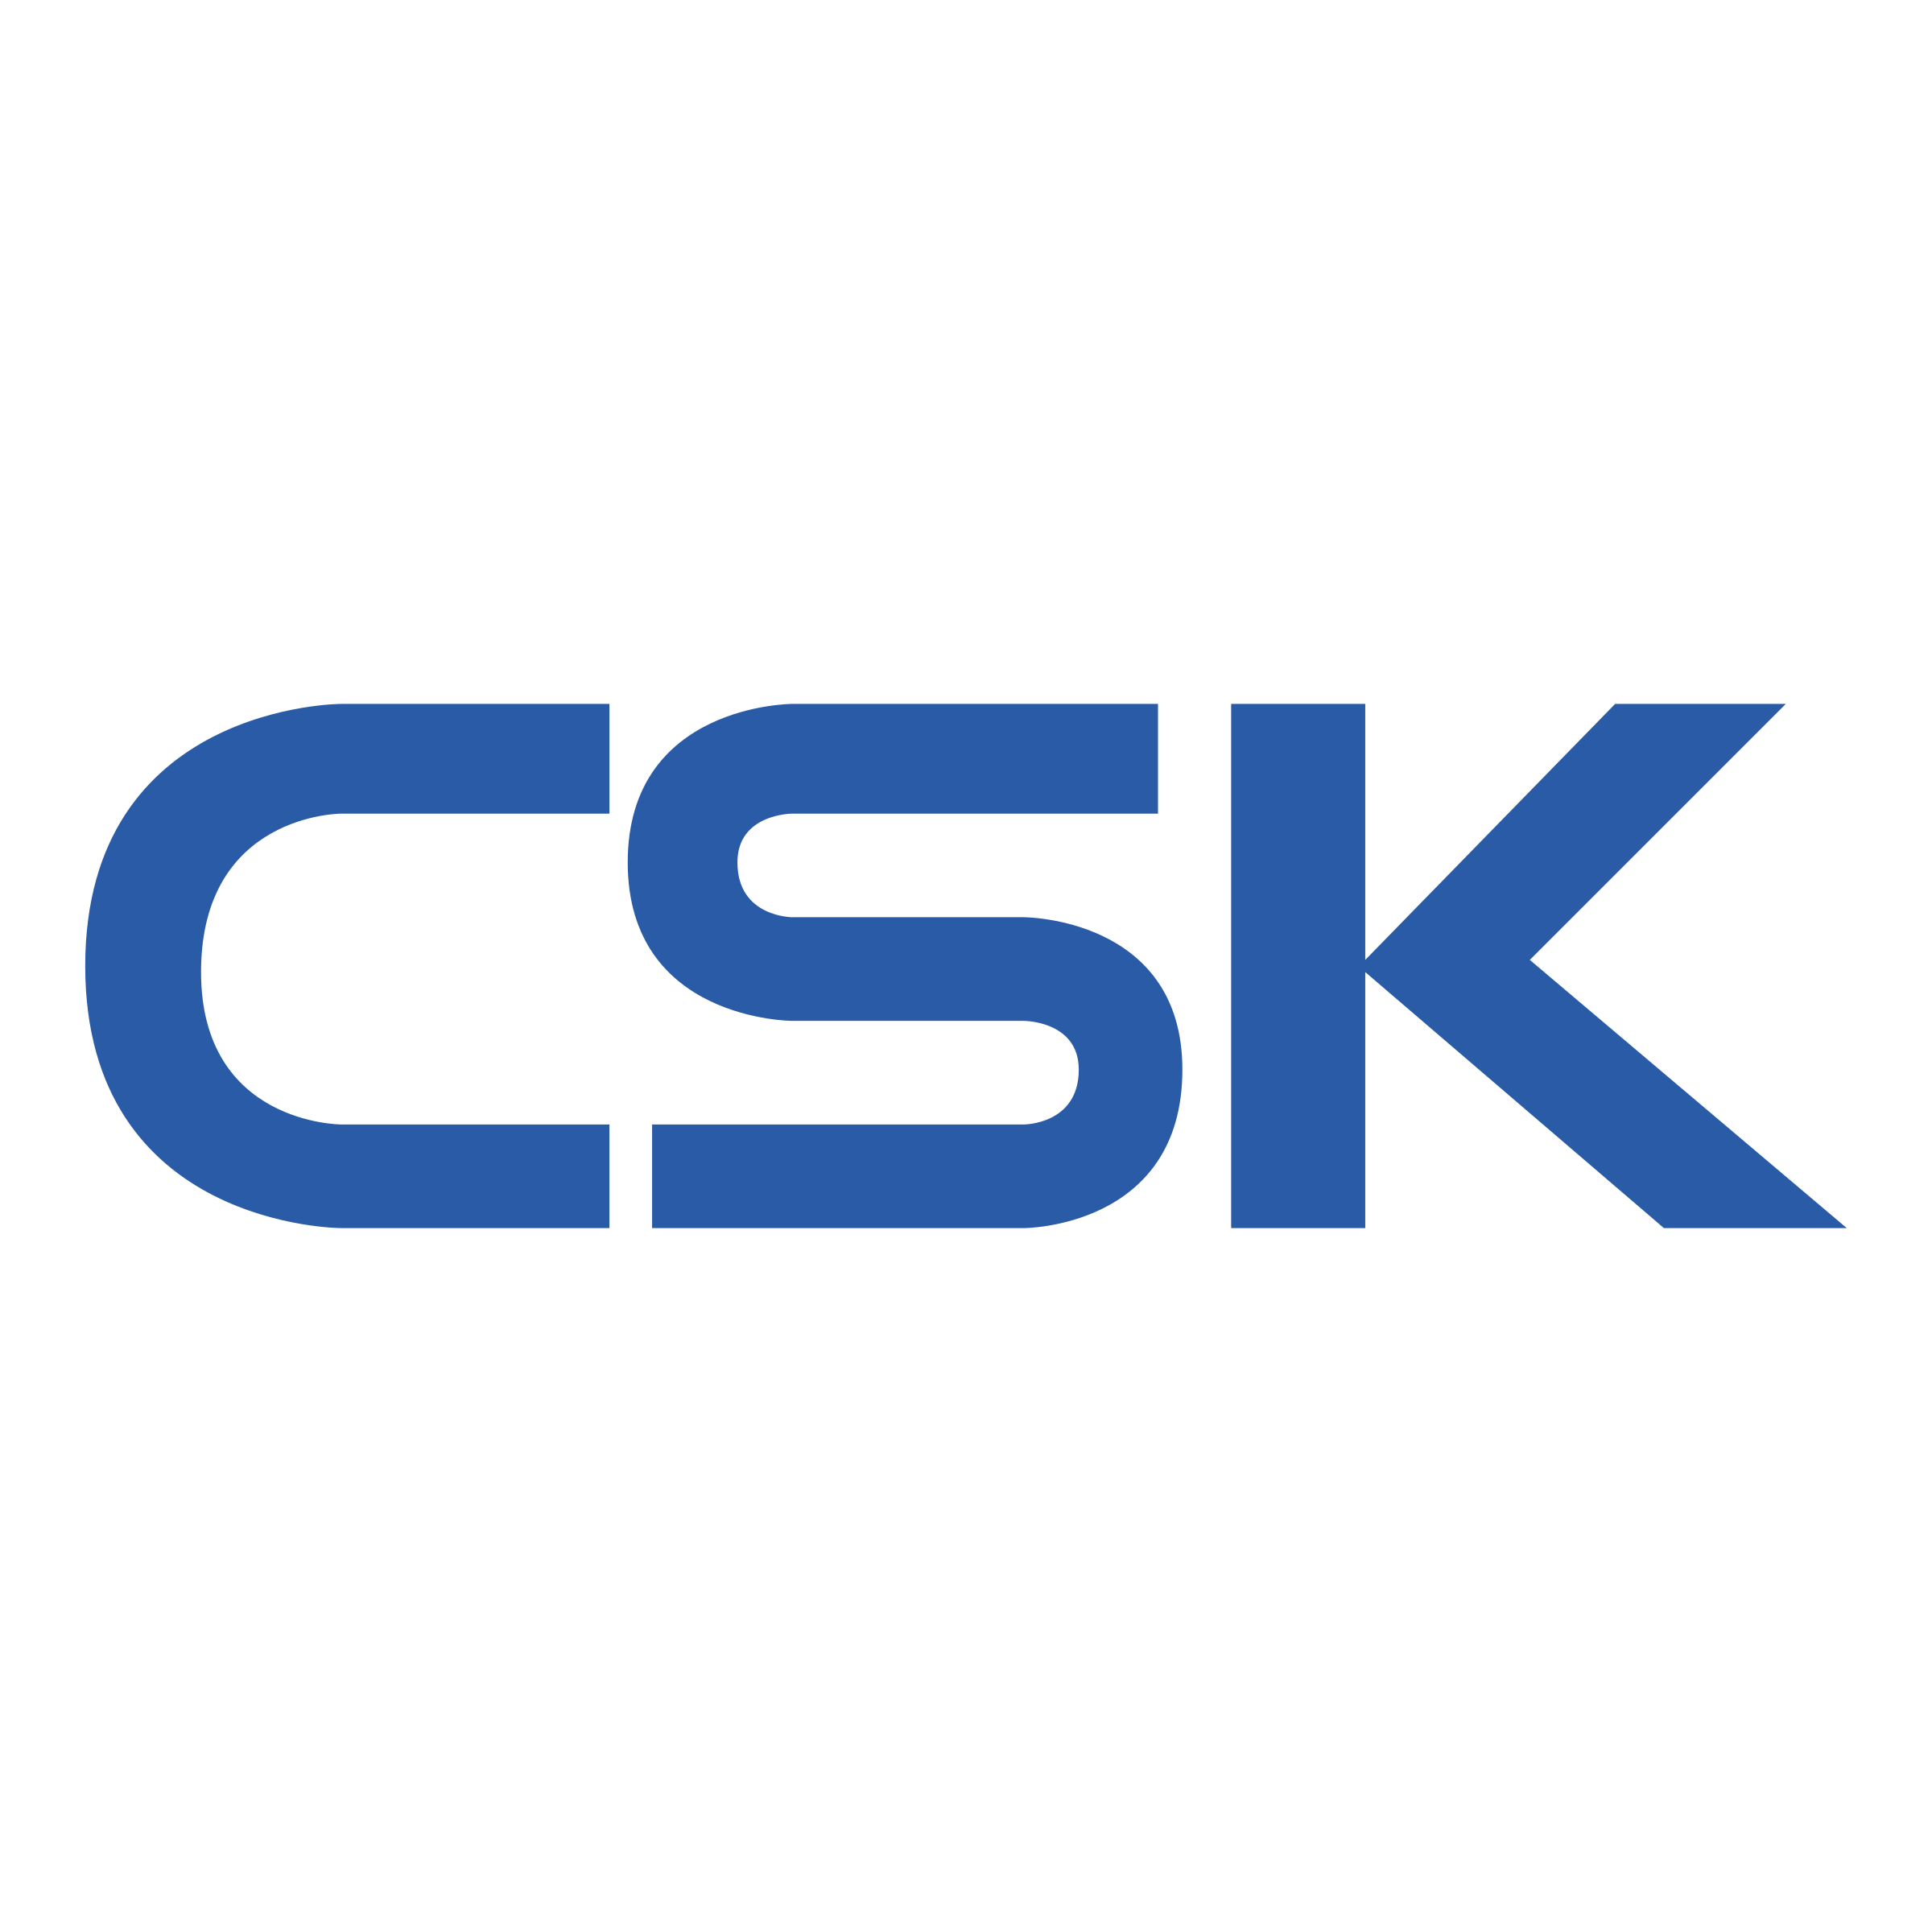 CSK Logo - CSK Logo PNG Transparent & SVG Vector - Freebie Supply